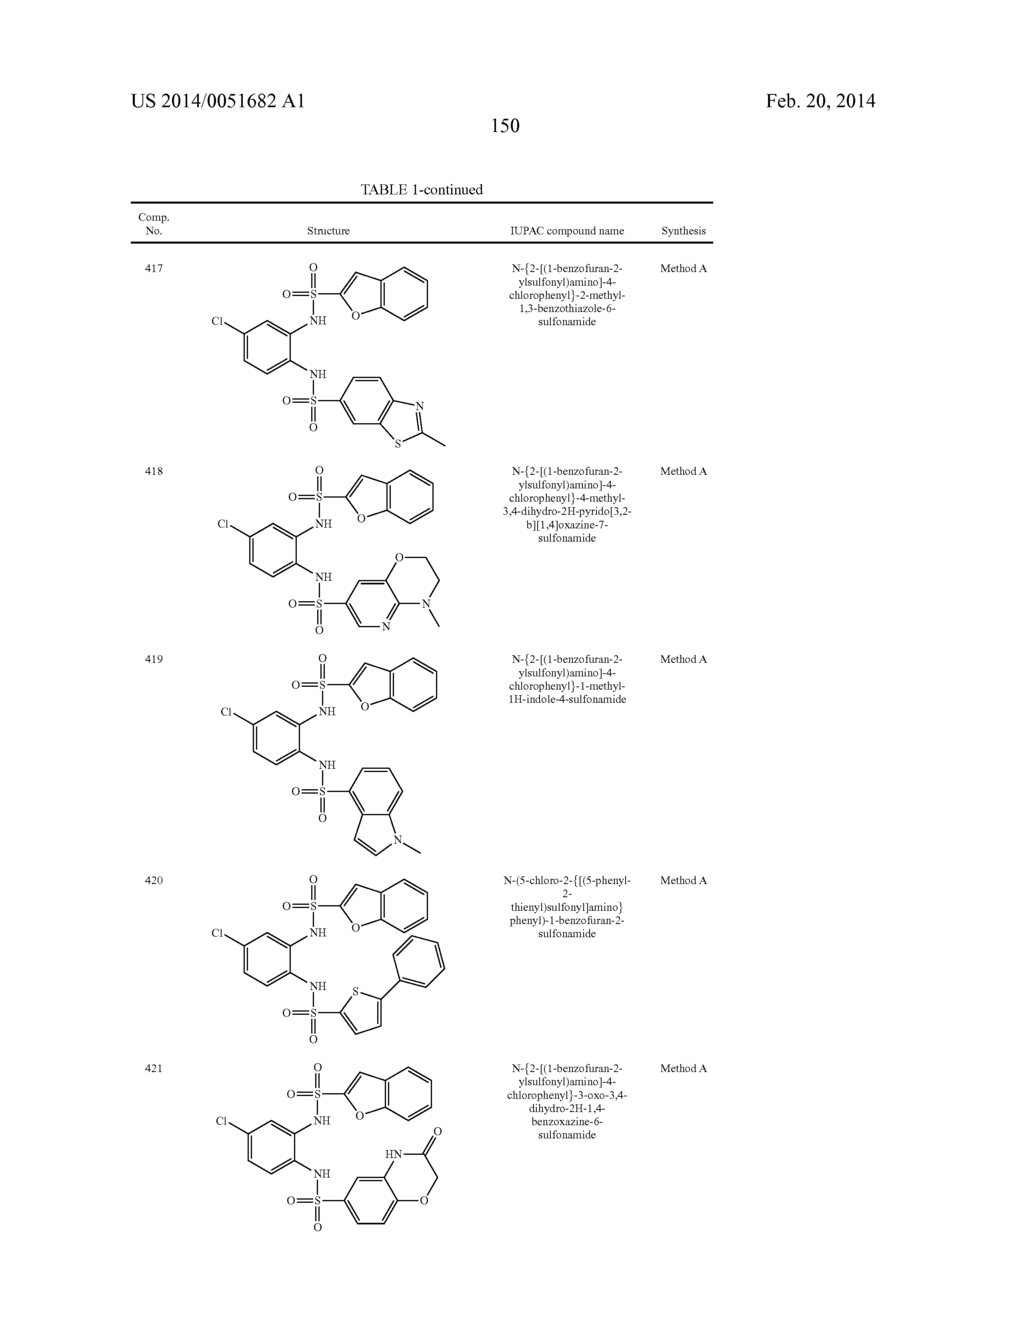 NOVEL 1,2- BIS-SULFONAMIDE DERIVATIVES AS CHEMOKINE RECEPTOR MODULATORS - diagram, schematic, and image 151